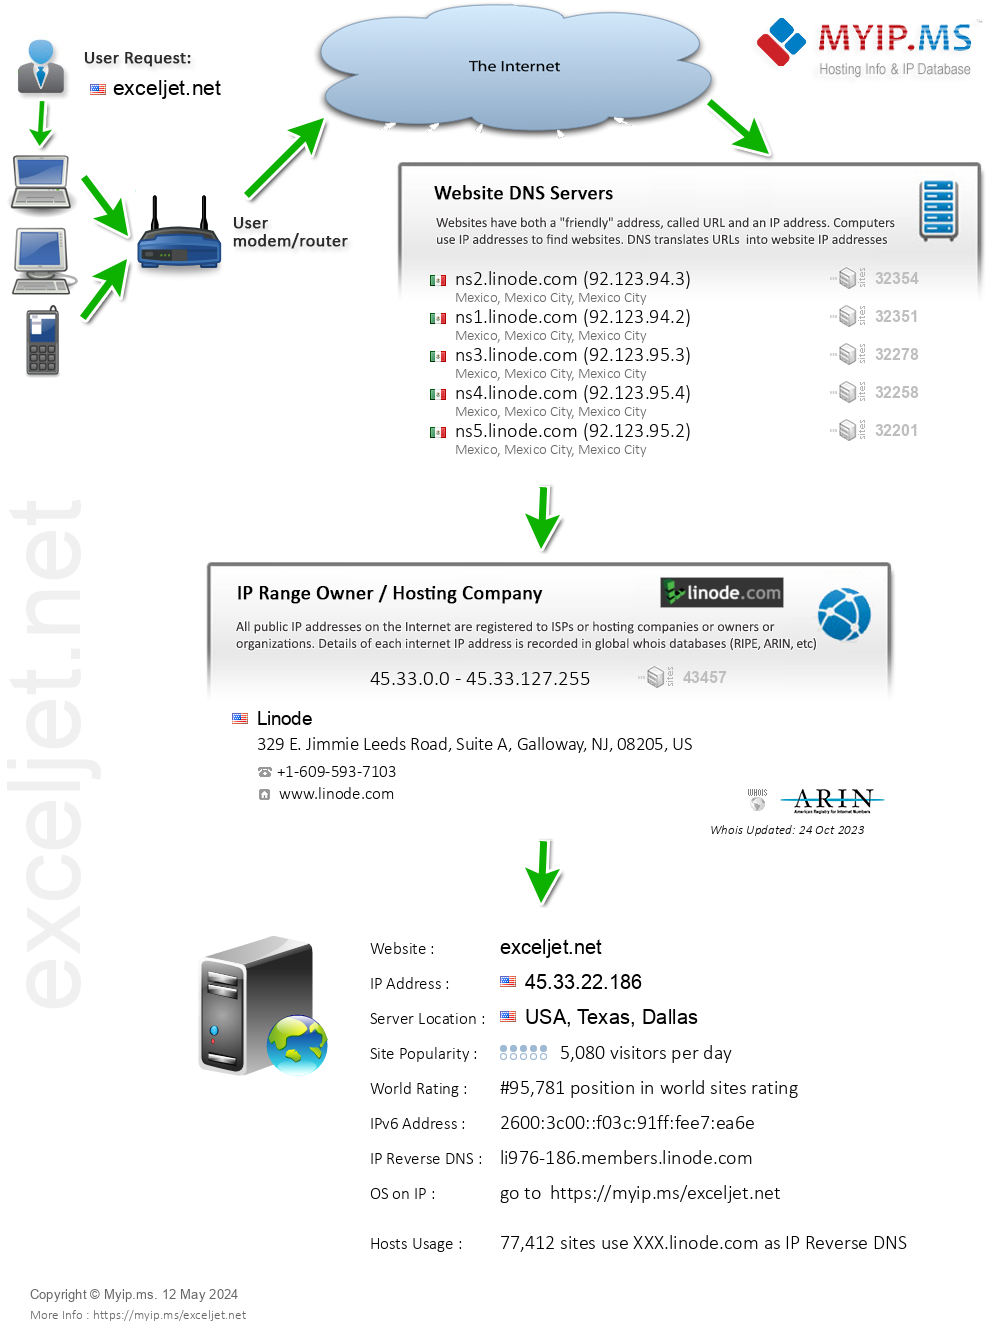 Exceljet.net - Website Hosting Visual IP Diagram